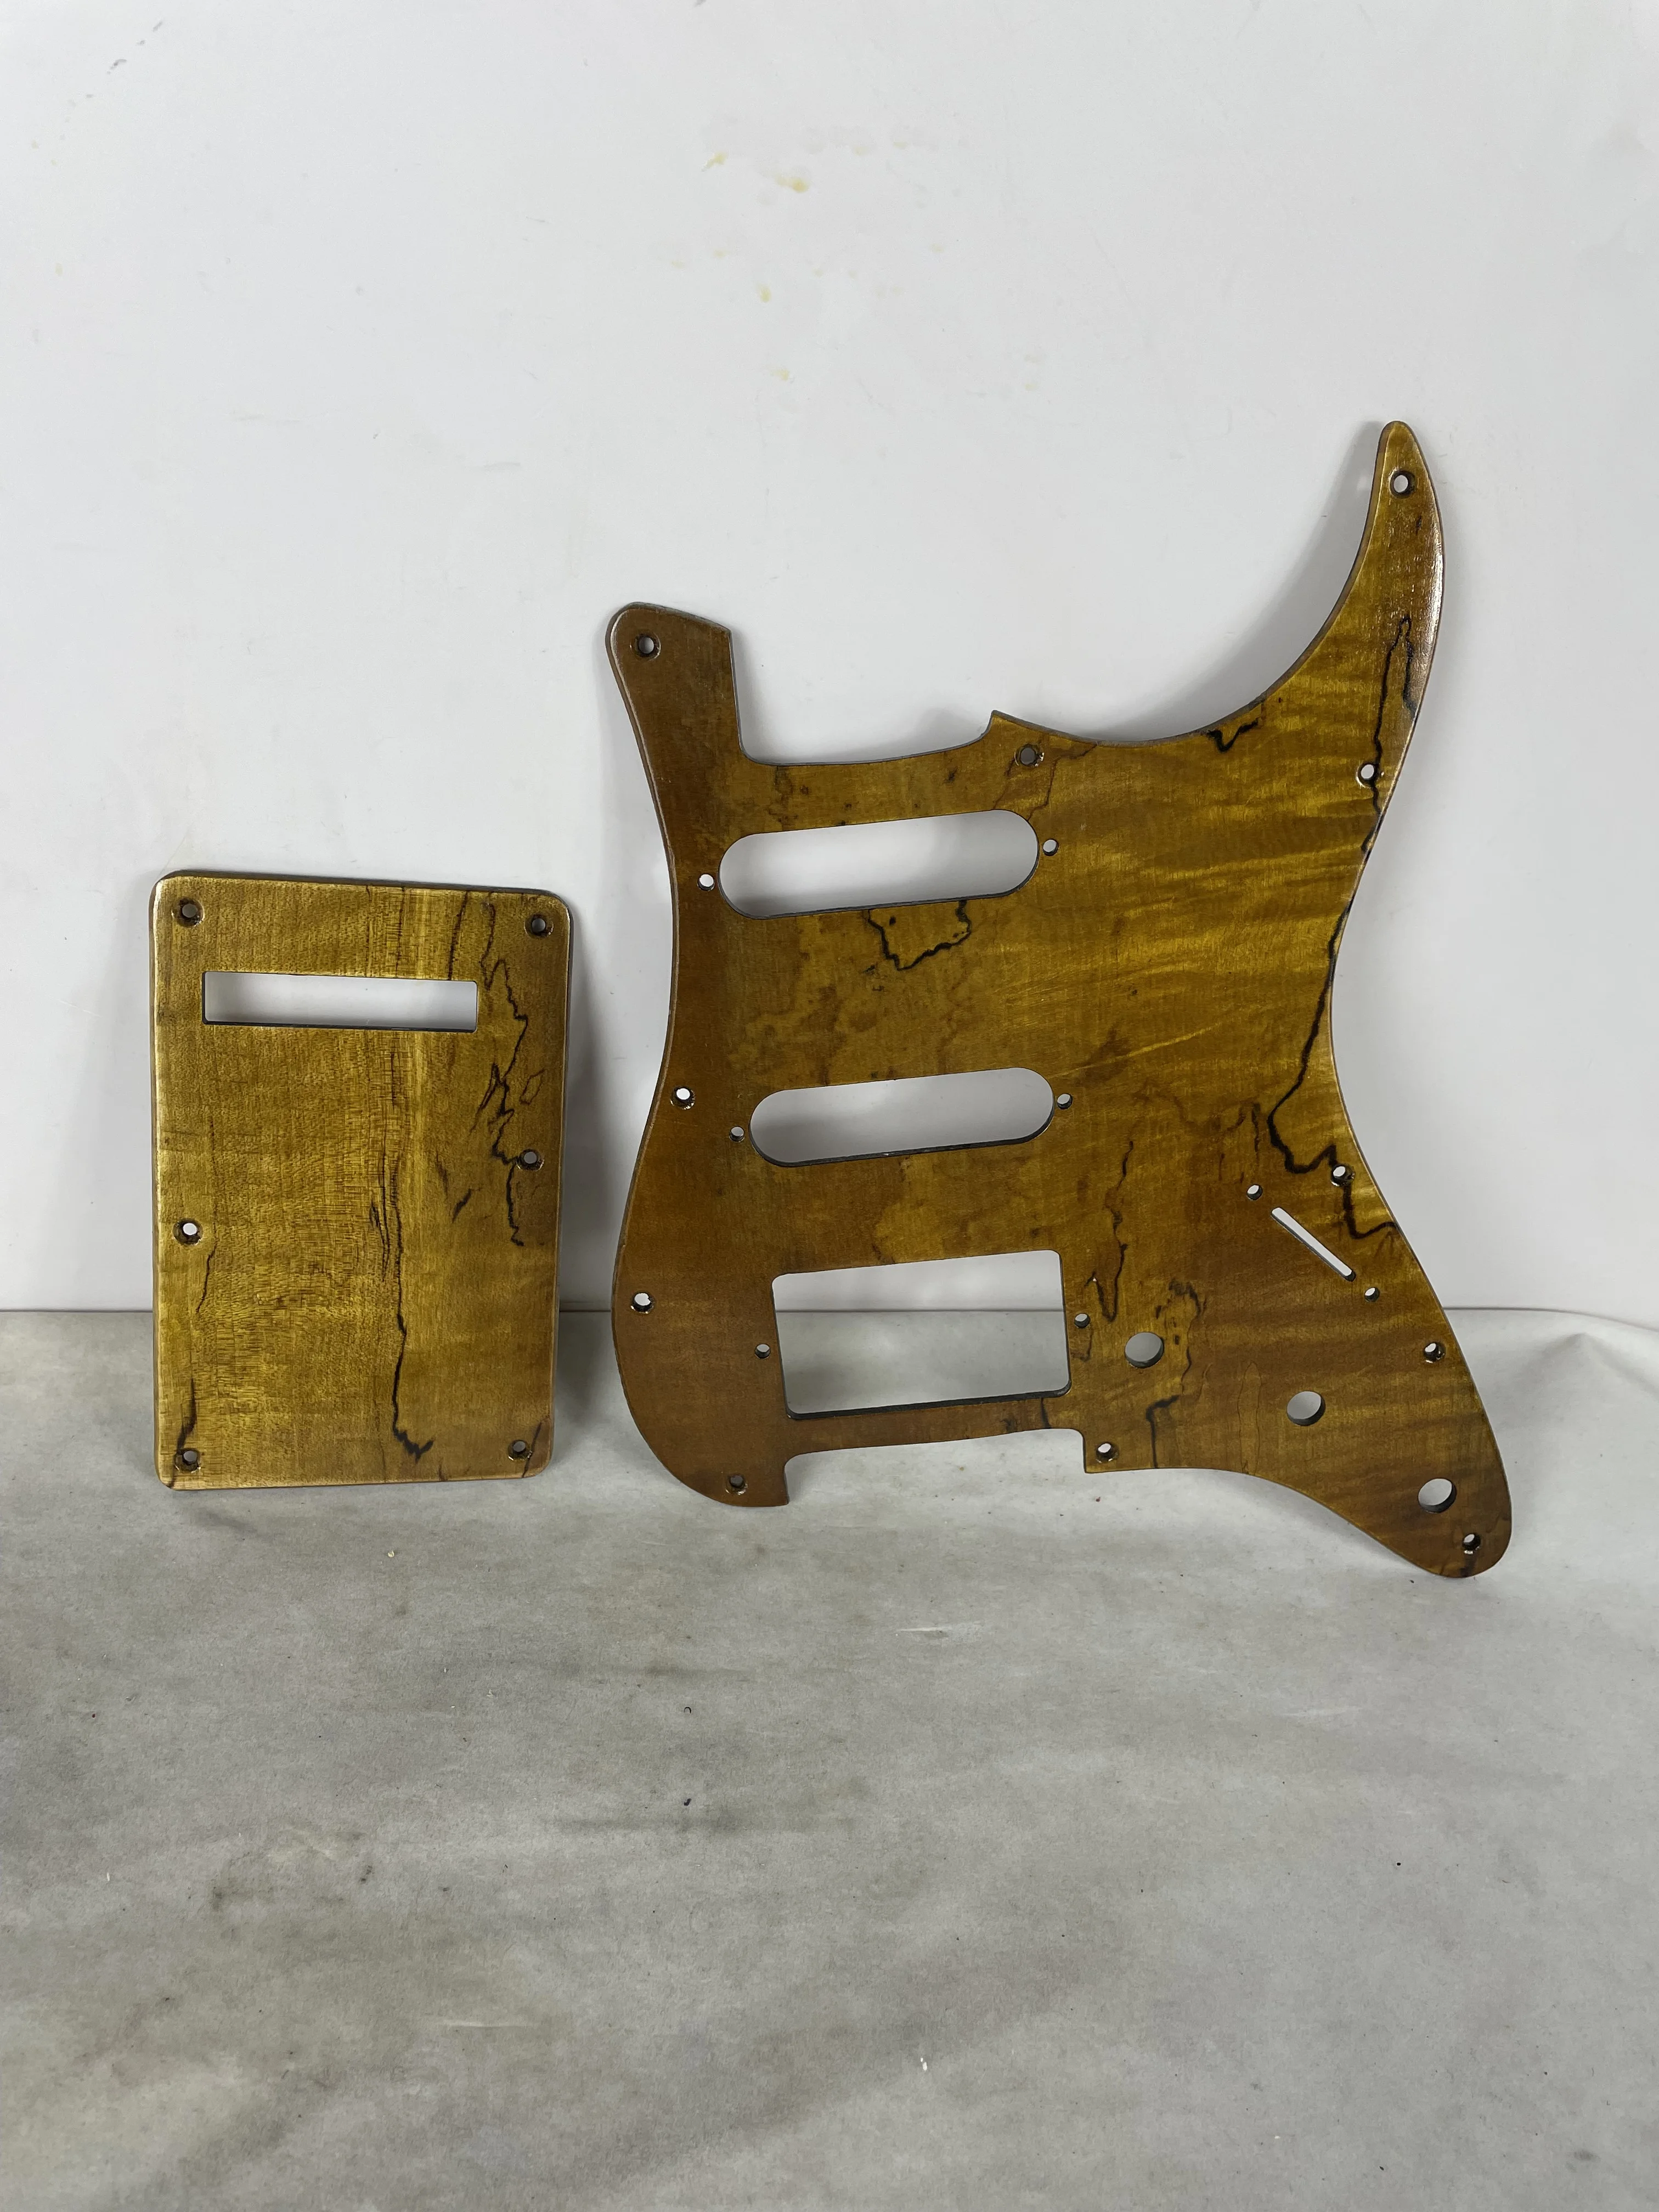 

A Set of Fender Style Flamed Maple Strat ST Guitar Pickguard SSH Natrual Wood Color Pick Guard & Back Plate & Screws